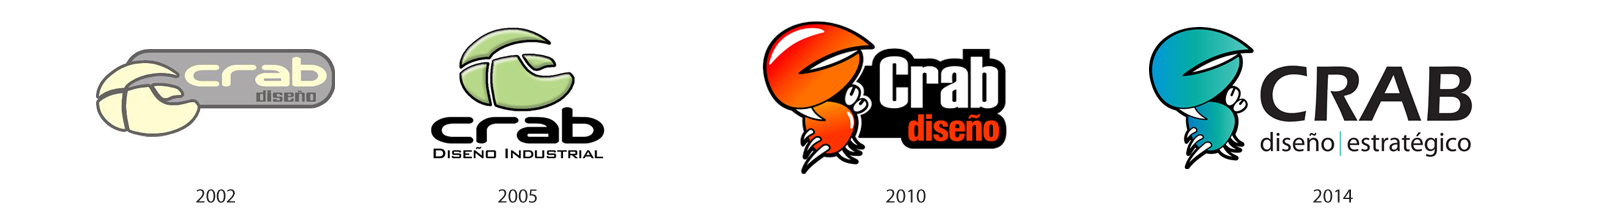 Evolucion-logos-Crab